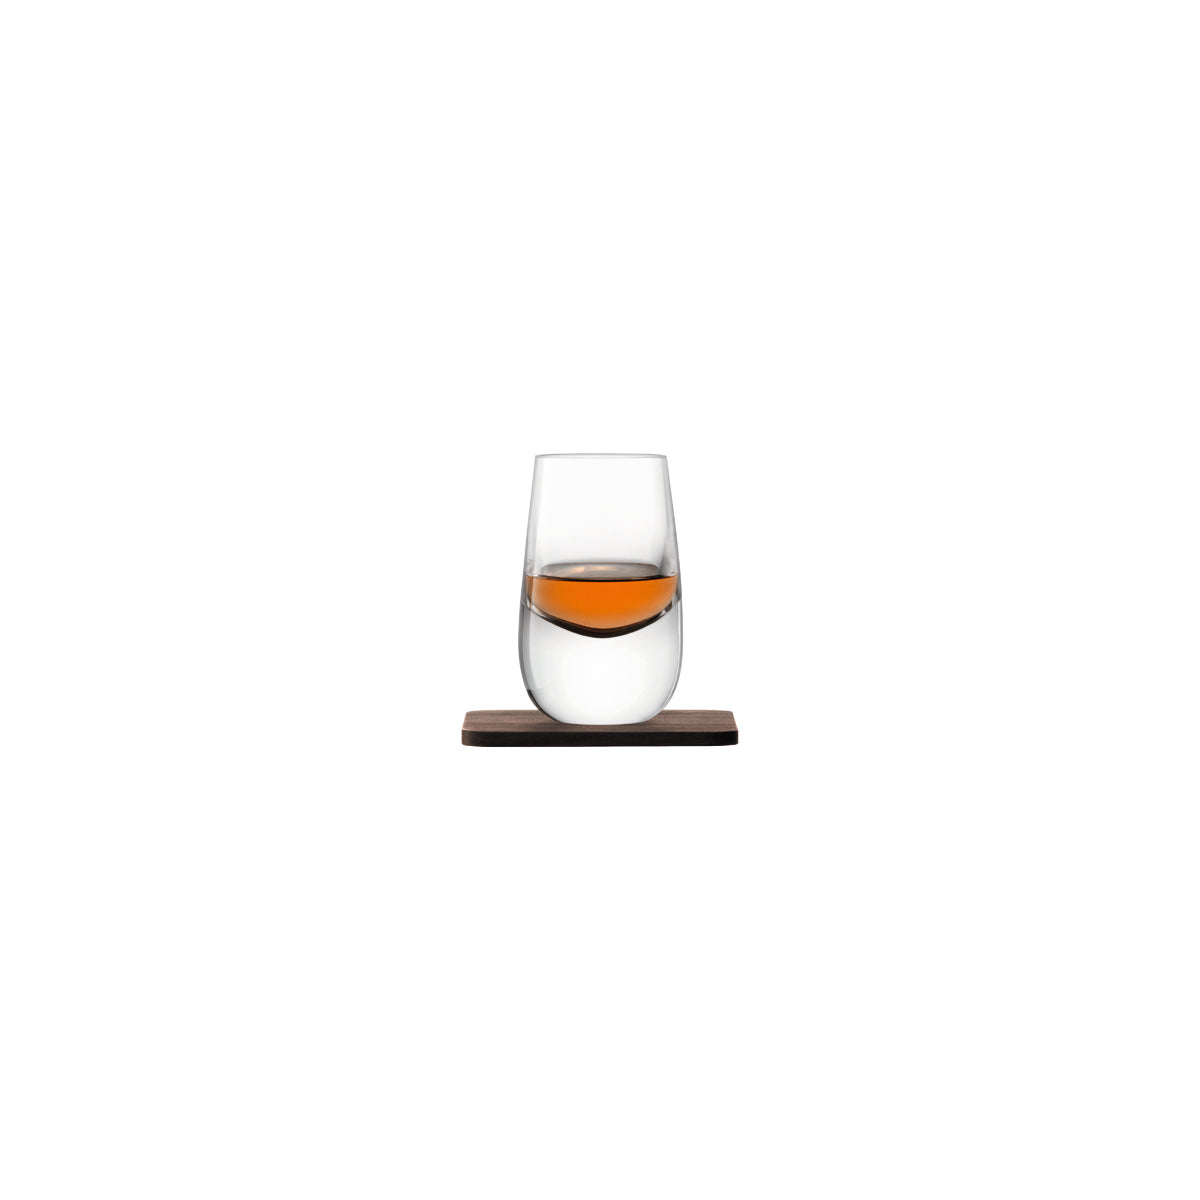 LSAG1213-03-301 LSA Whisky Islay Shot Glass & Walnut Coaster 80ml x 2 Tomkin Australia Hospitality Supplies